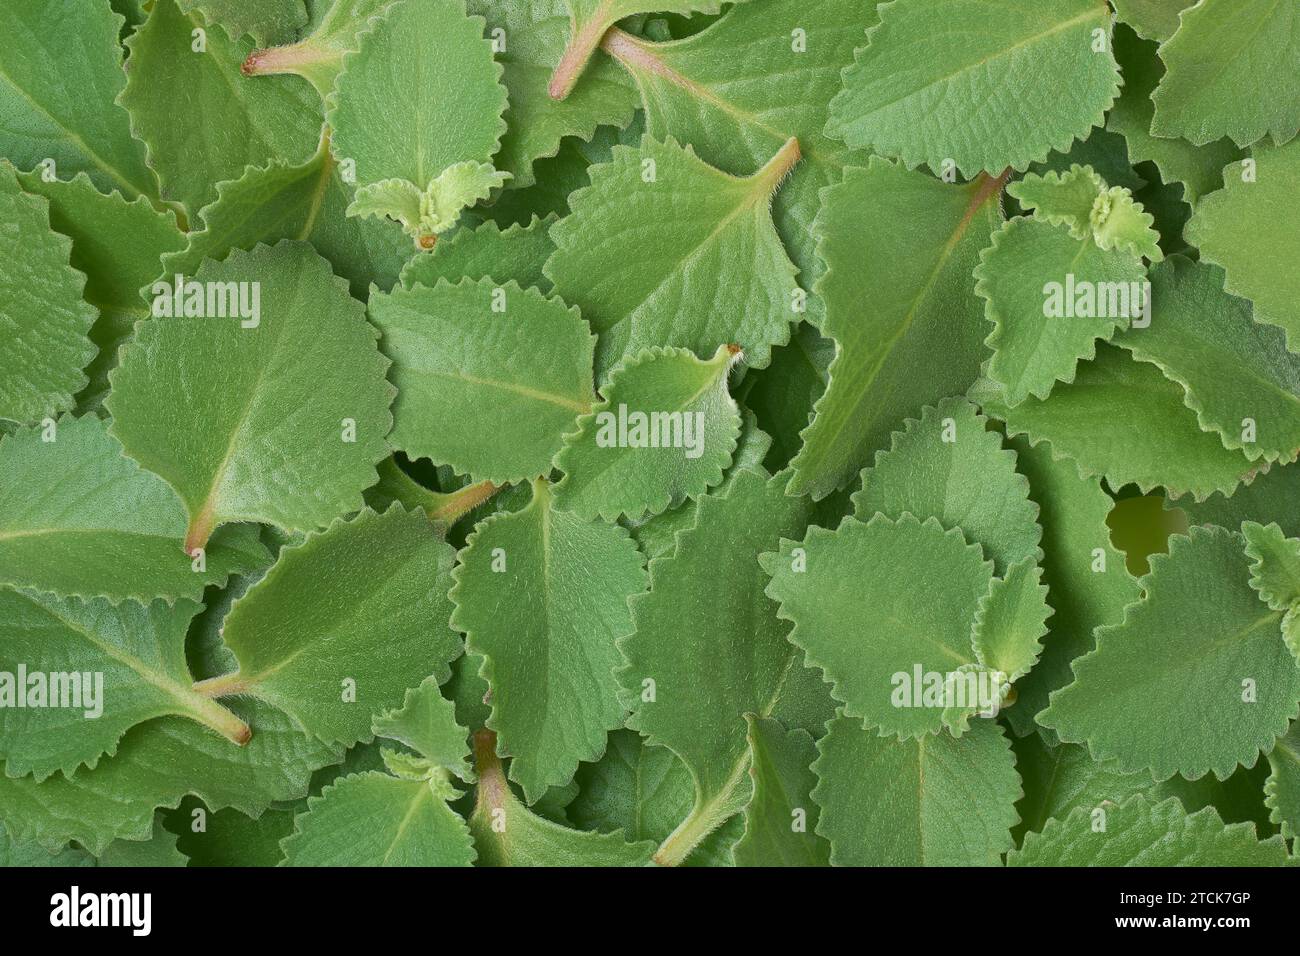 pile of freshly harvested oregano plant leaves, aka origanum or wild marjoram, widely used aromatic herbal mint family plant leaves Stock Photo